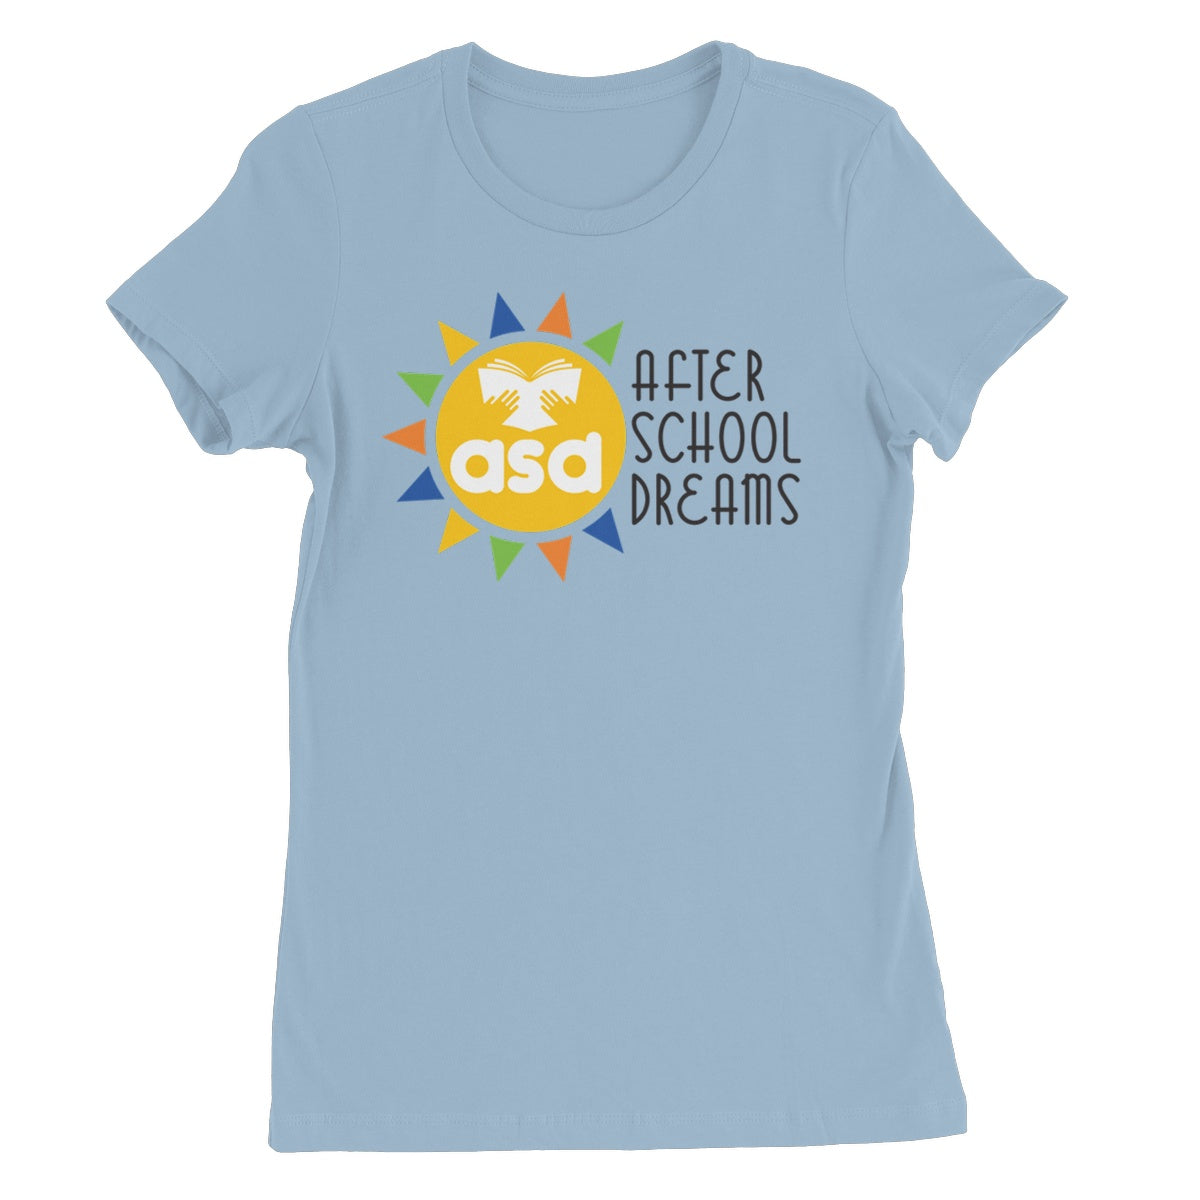 After School Dreams Women's Classic T-Shirt